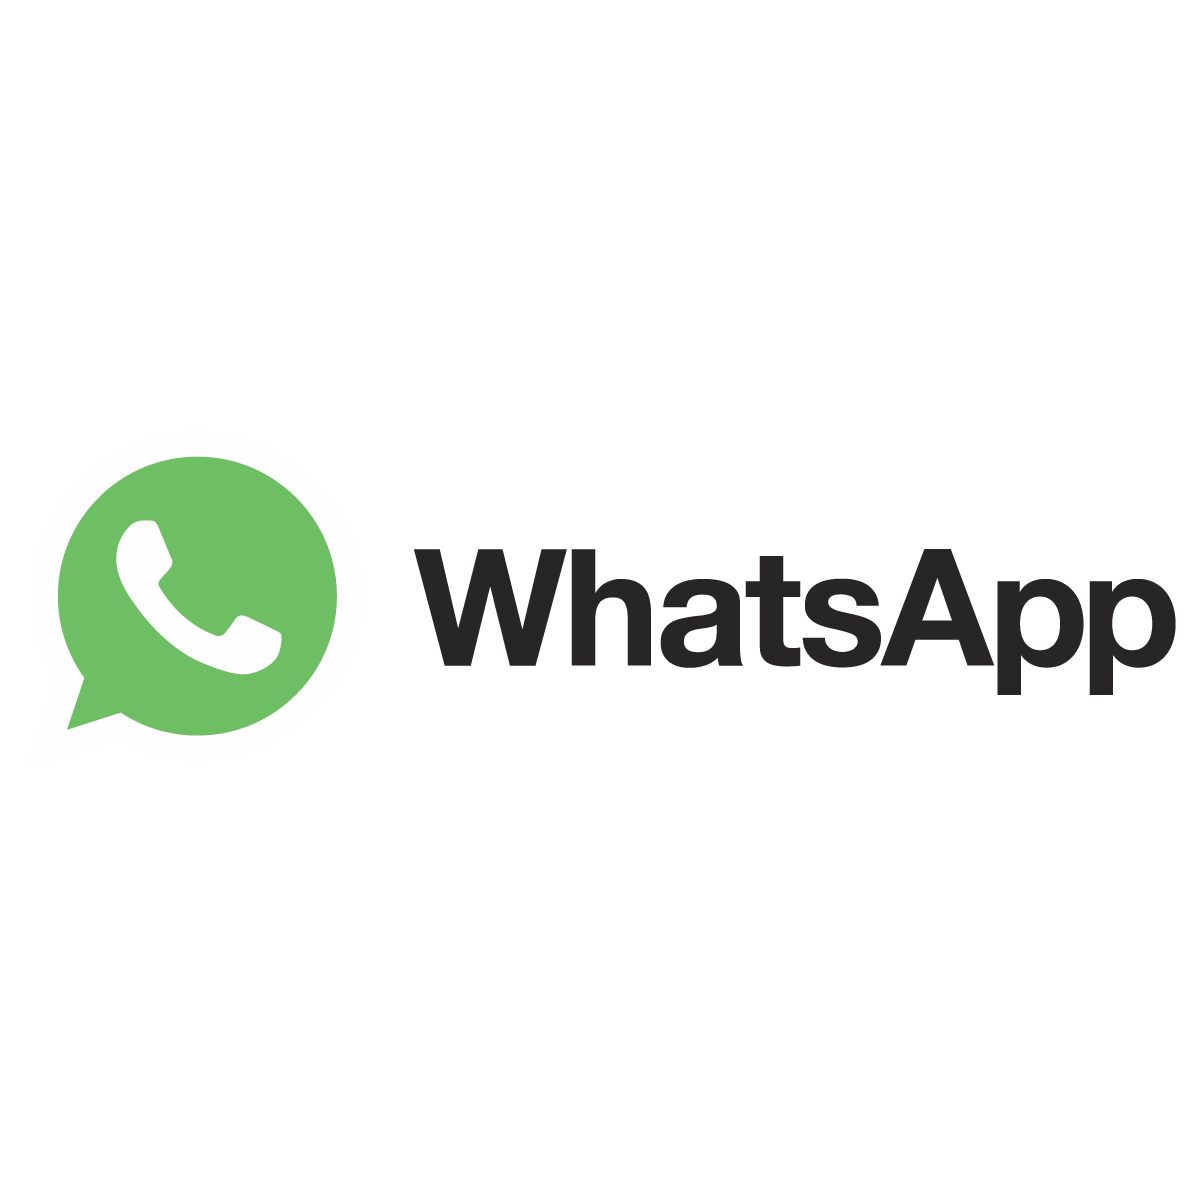 Whatsapp Logo Eps PNG - 102150